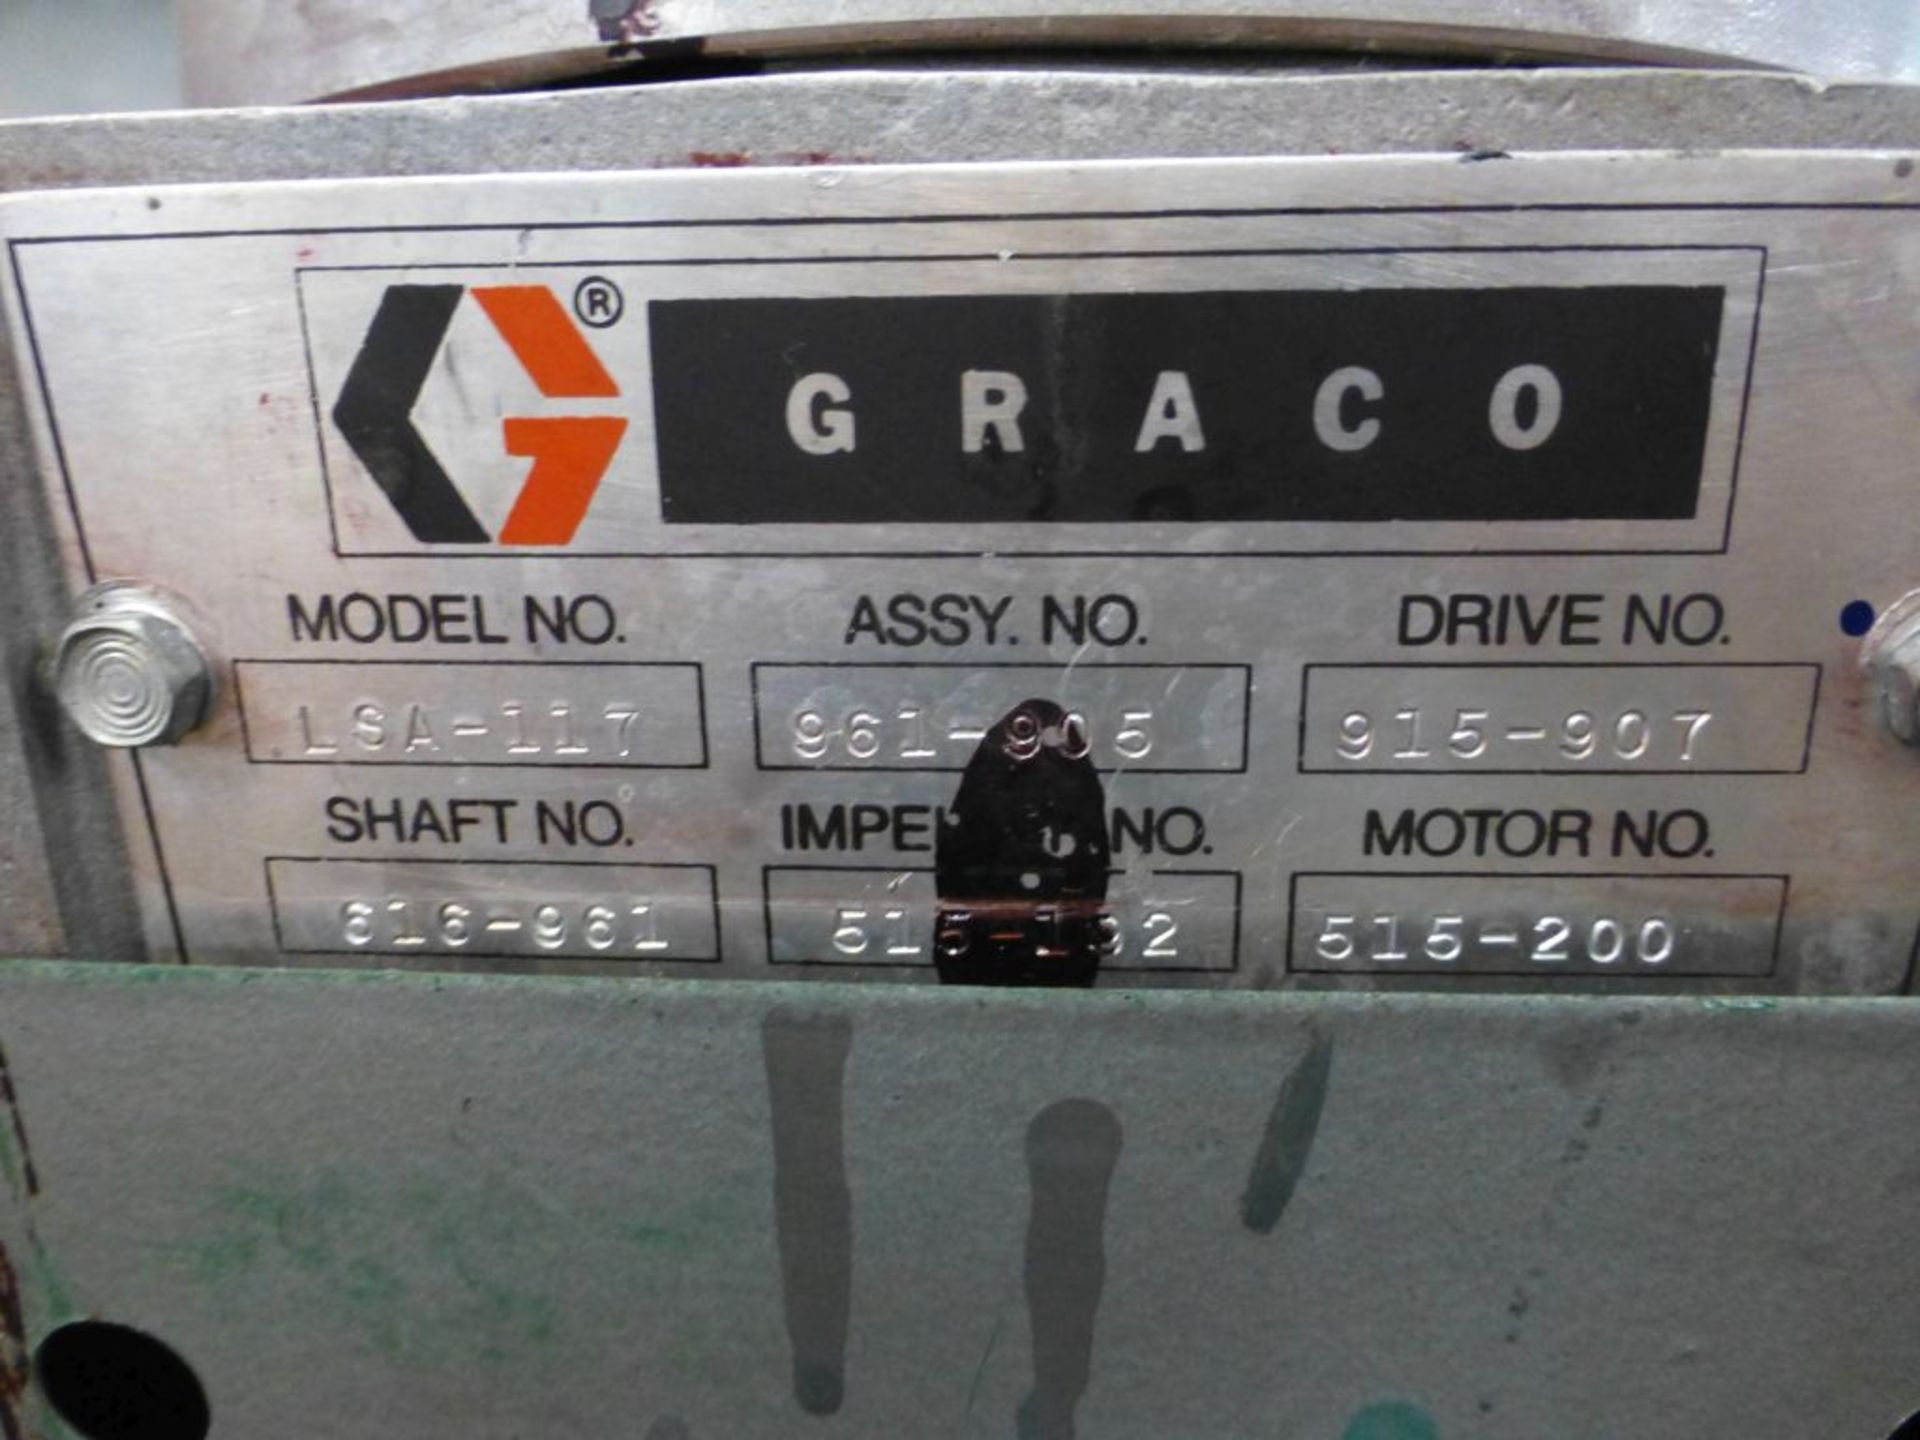 1987 Graco 616-341 Stainless Steel Tank|Includes:; Graco Agitator & Drexel Brook Sensor Model No. - Image 5 of 7